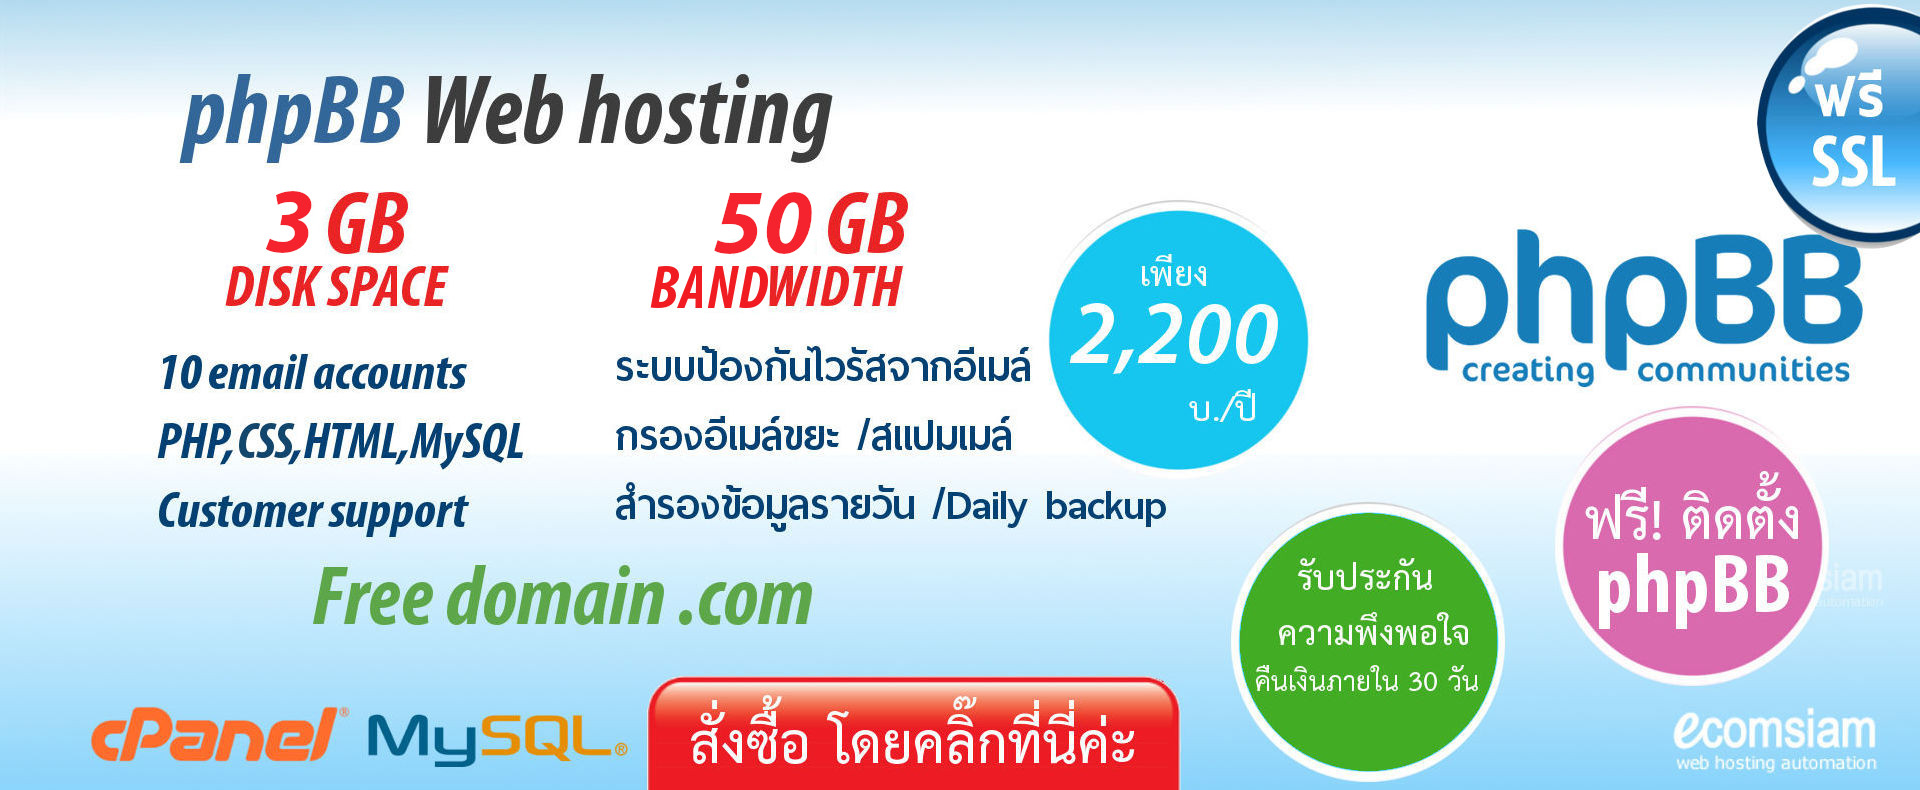 web hosting thai แนะนำ phpbb web hosting thailand เพียง 2,200 บ./ปี เว็บโฮสติ้งไทย ฟรี โดเมน ฟรี SSL ฟรีติดตั้ง แนะนำเว็บโฮสติ้ง บริการลูกค้า  Support ดูแลดี โดย webhosting.com.co.th - phpbb web hosting thailand free domain